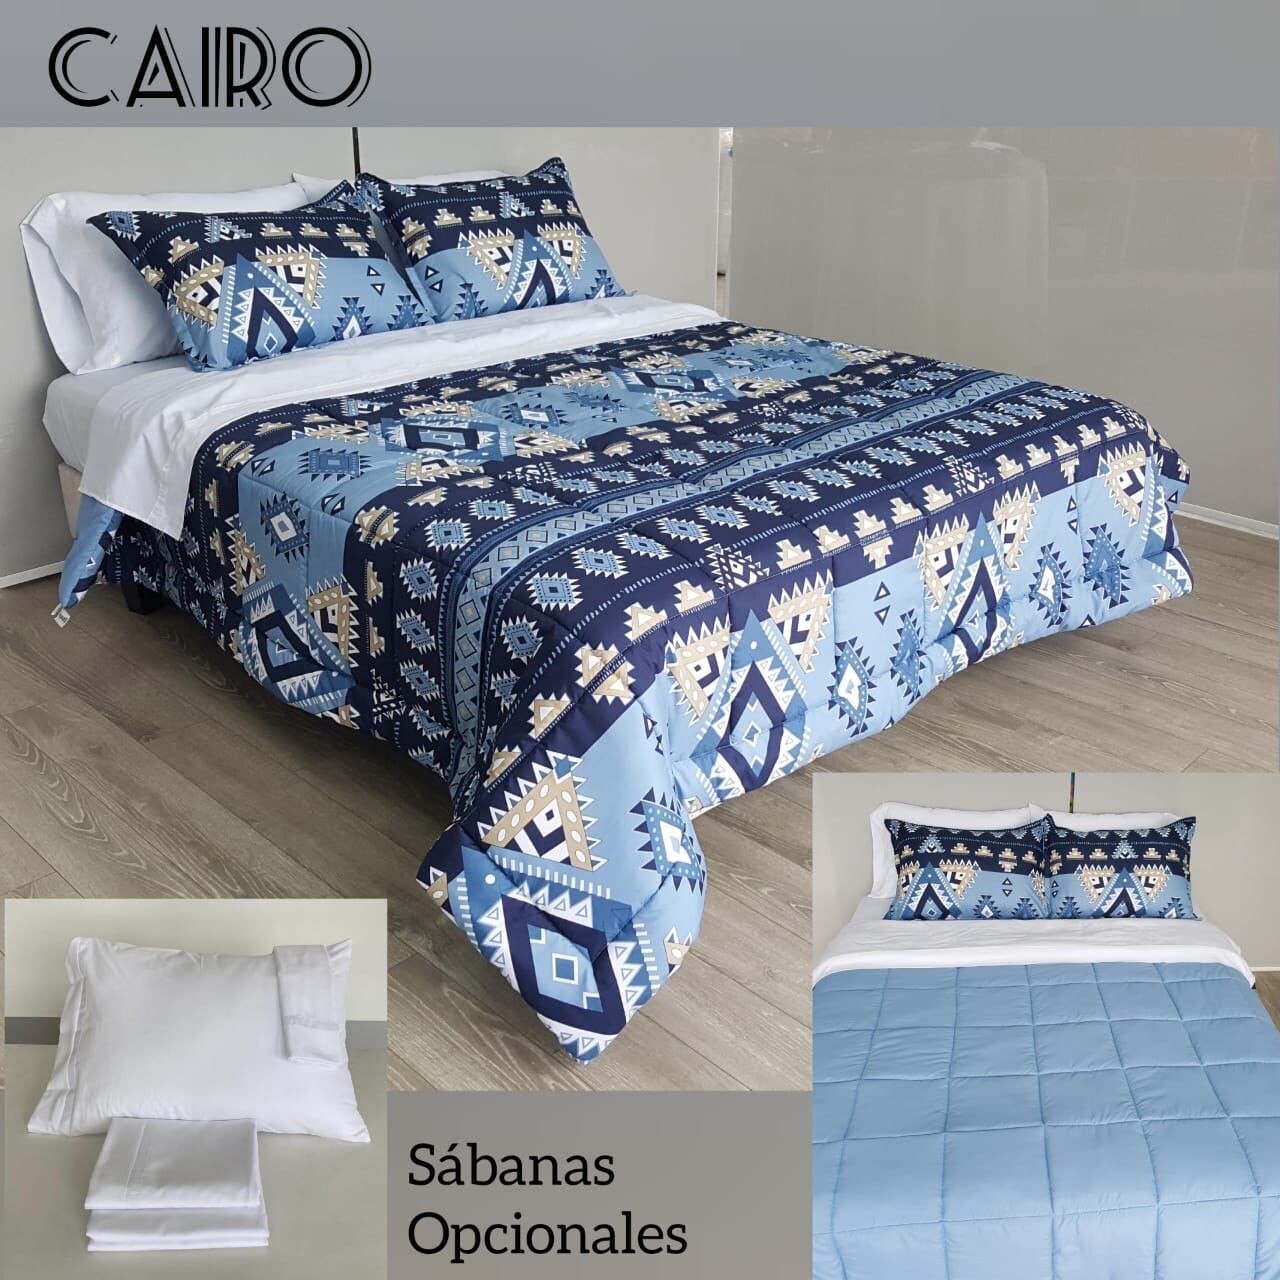 Cobertor Reversible CAIRO